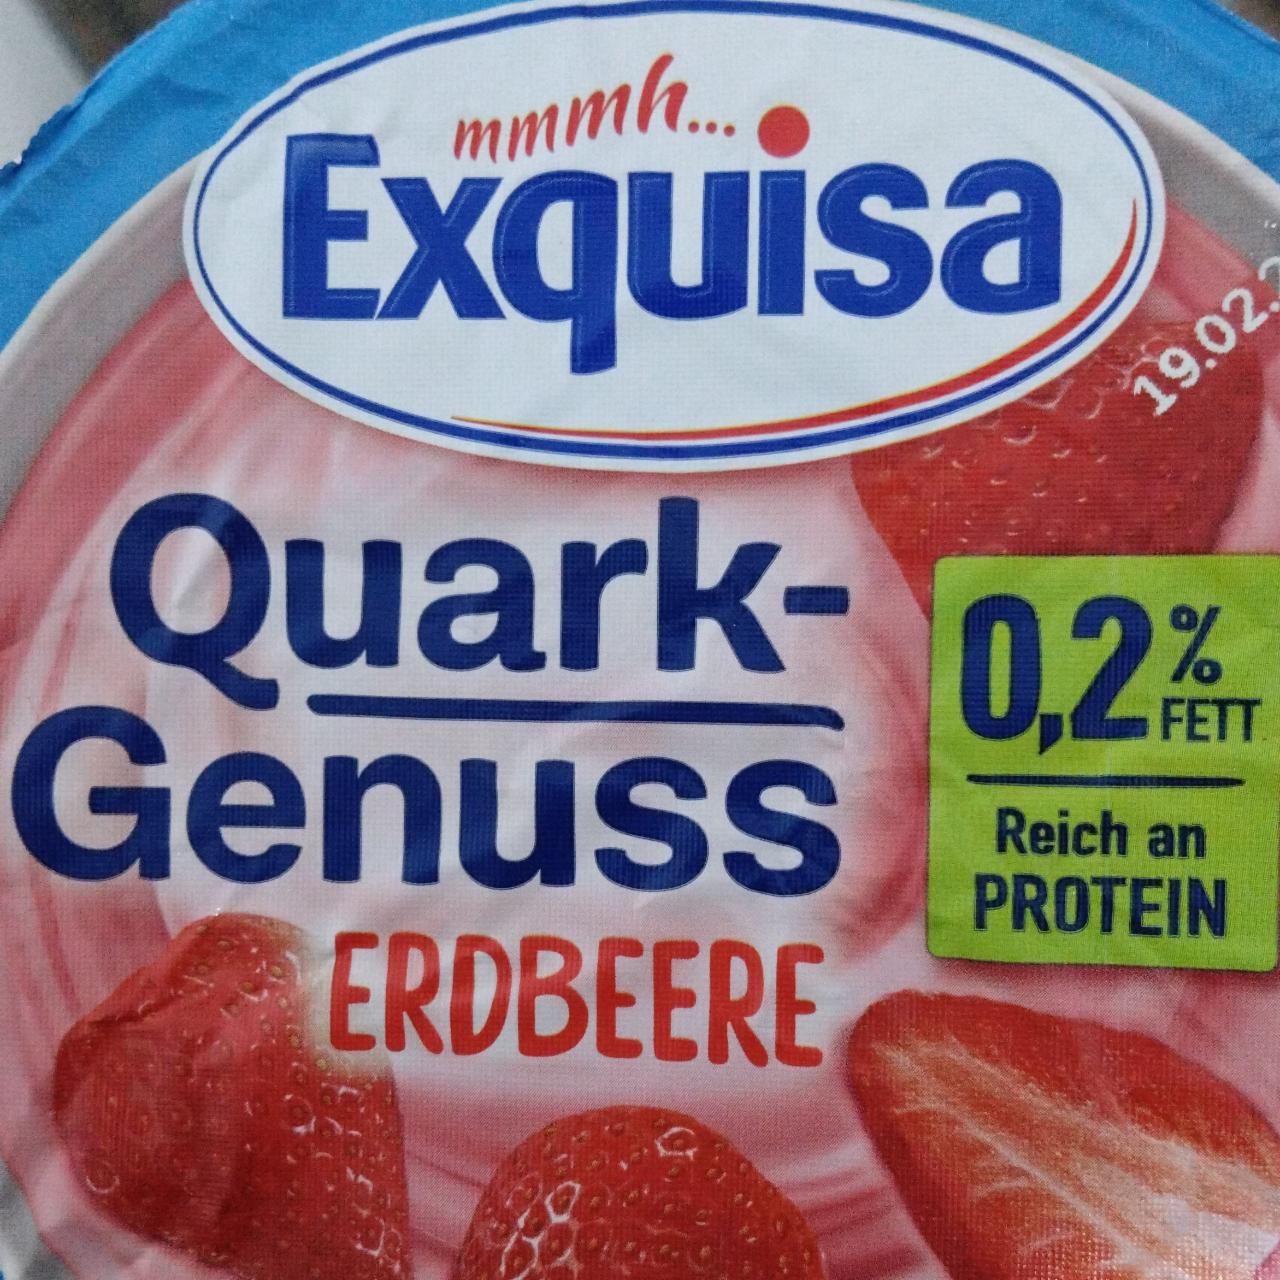 Фото - Quark Genuss Erdbeere Exquisa